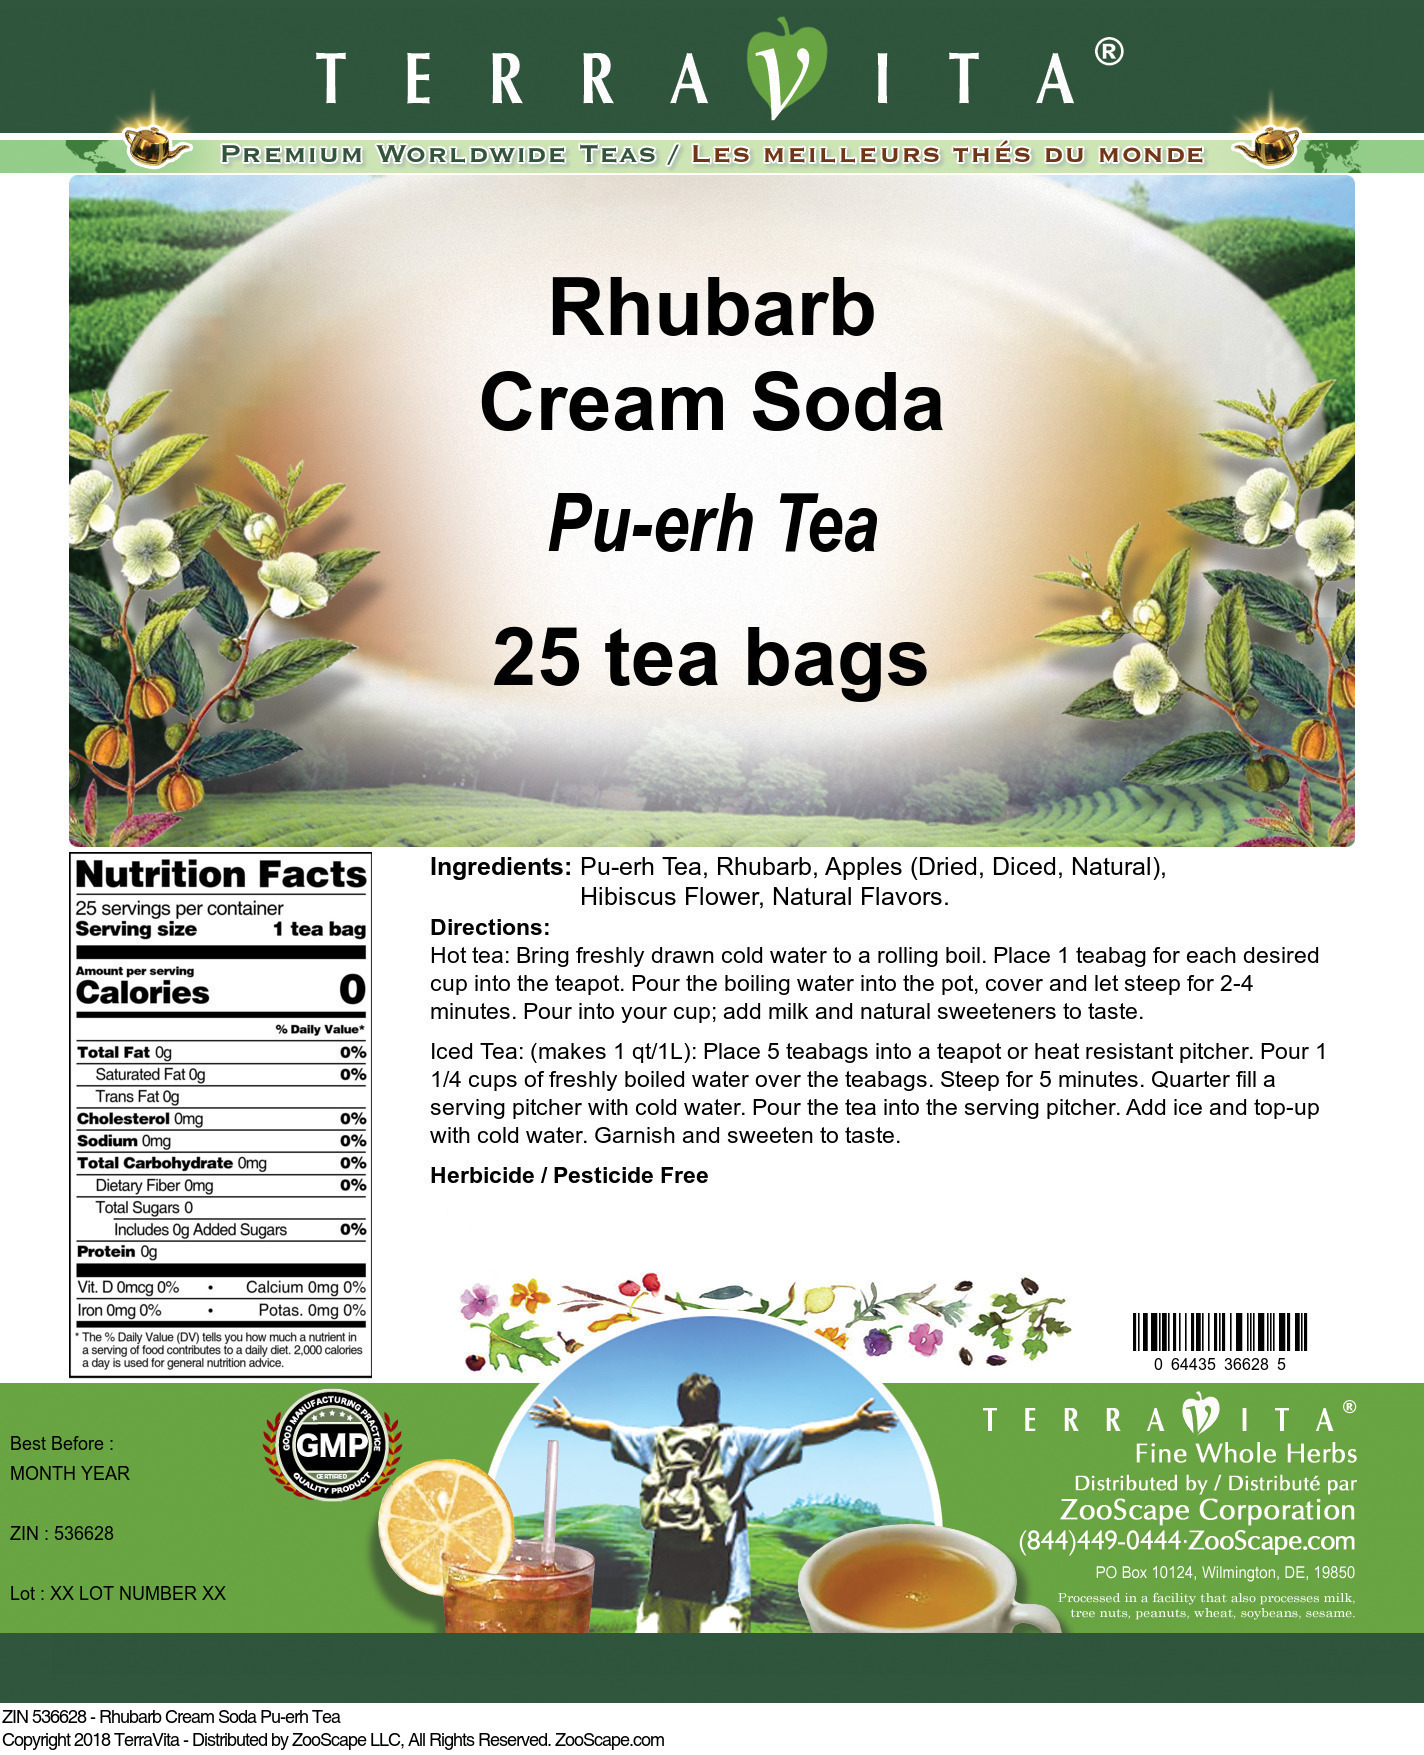 Rhubarb Cream Soda Pu-erh Tea - Label